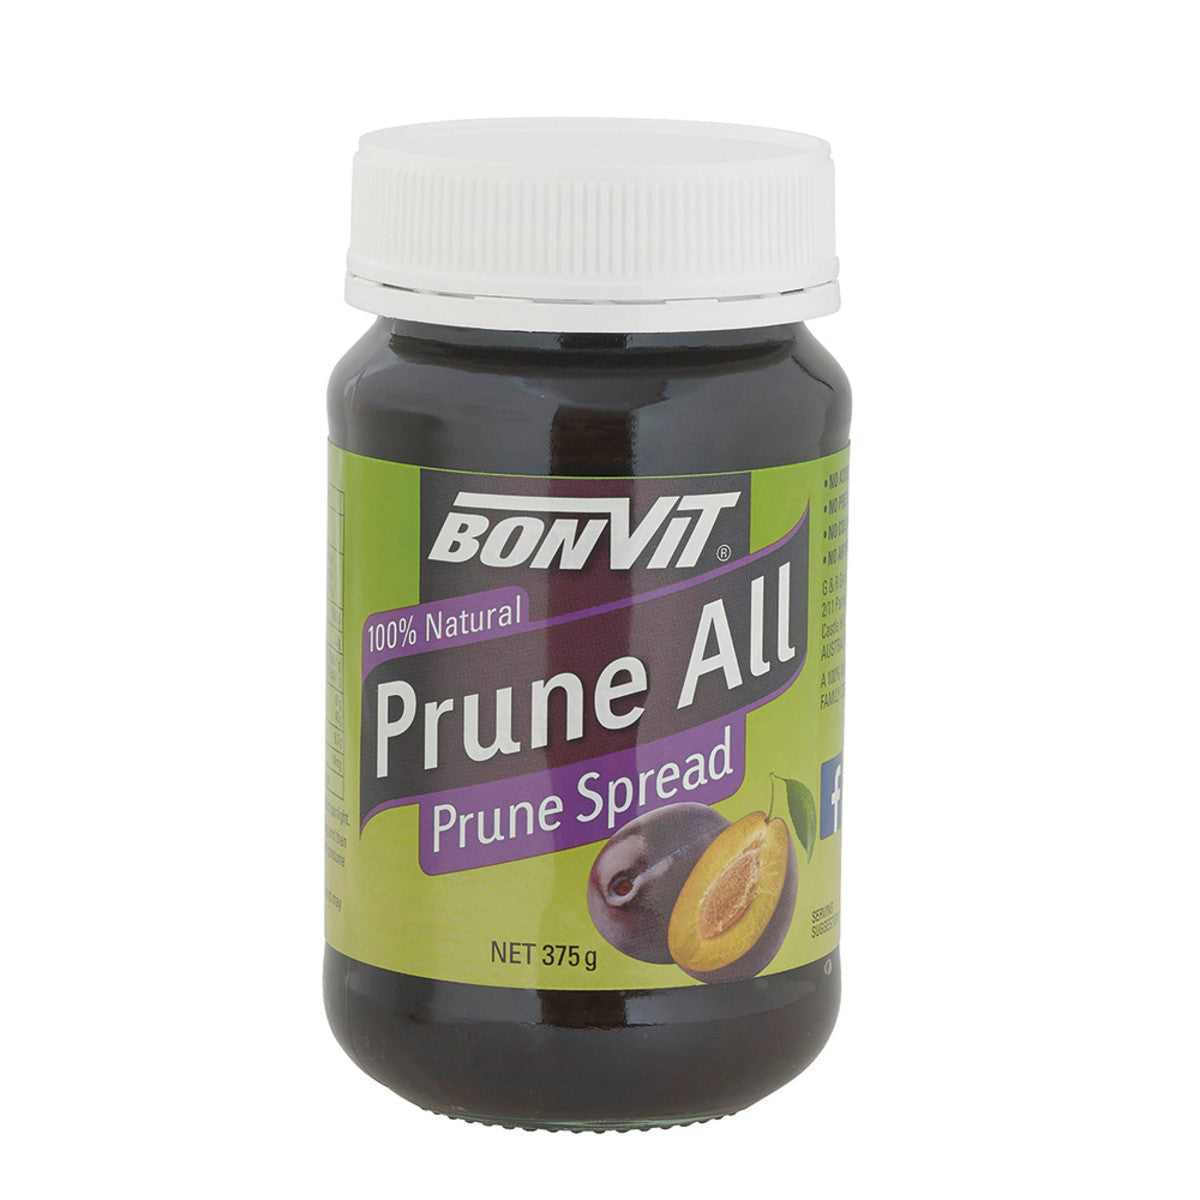 Bonvit Prune Spread 375g, 100% Natural & Australian